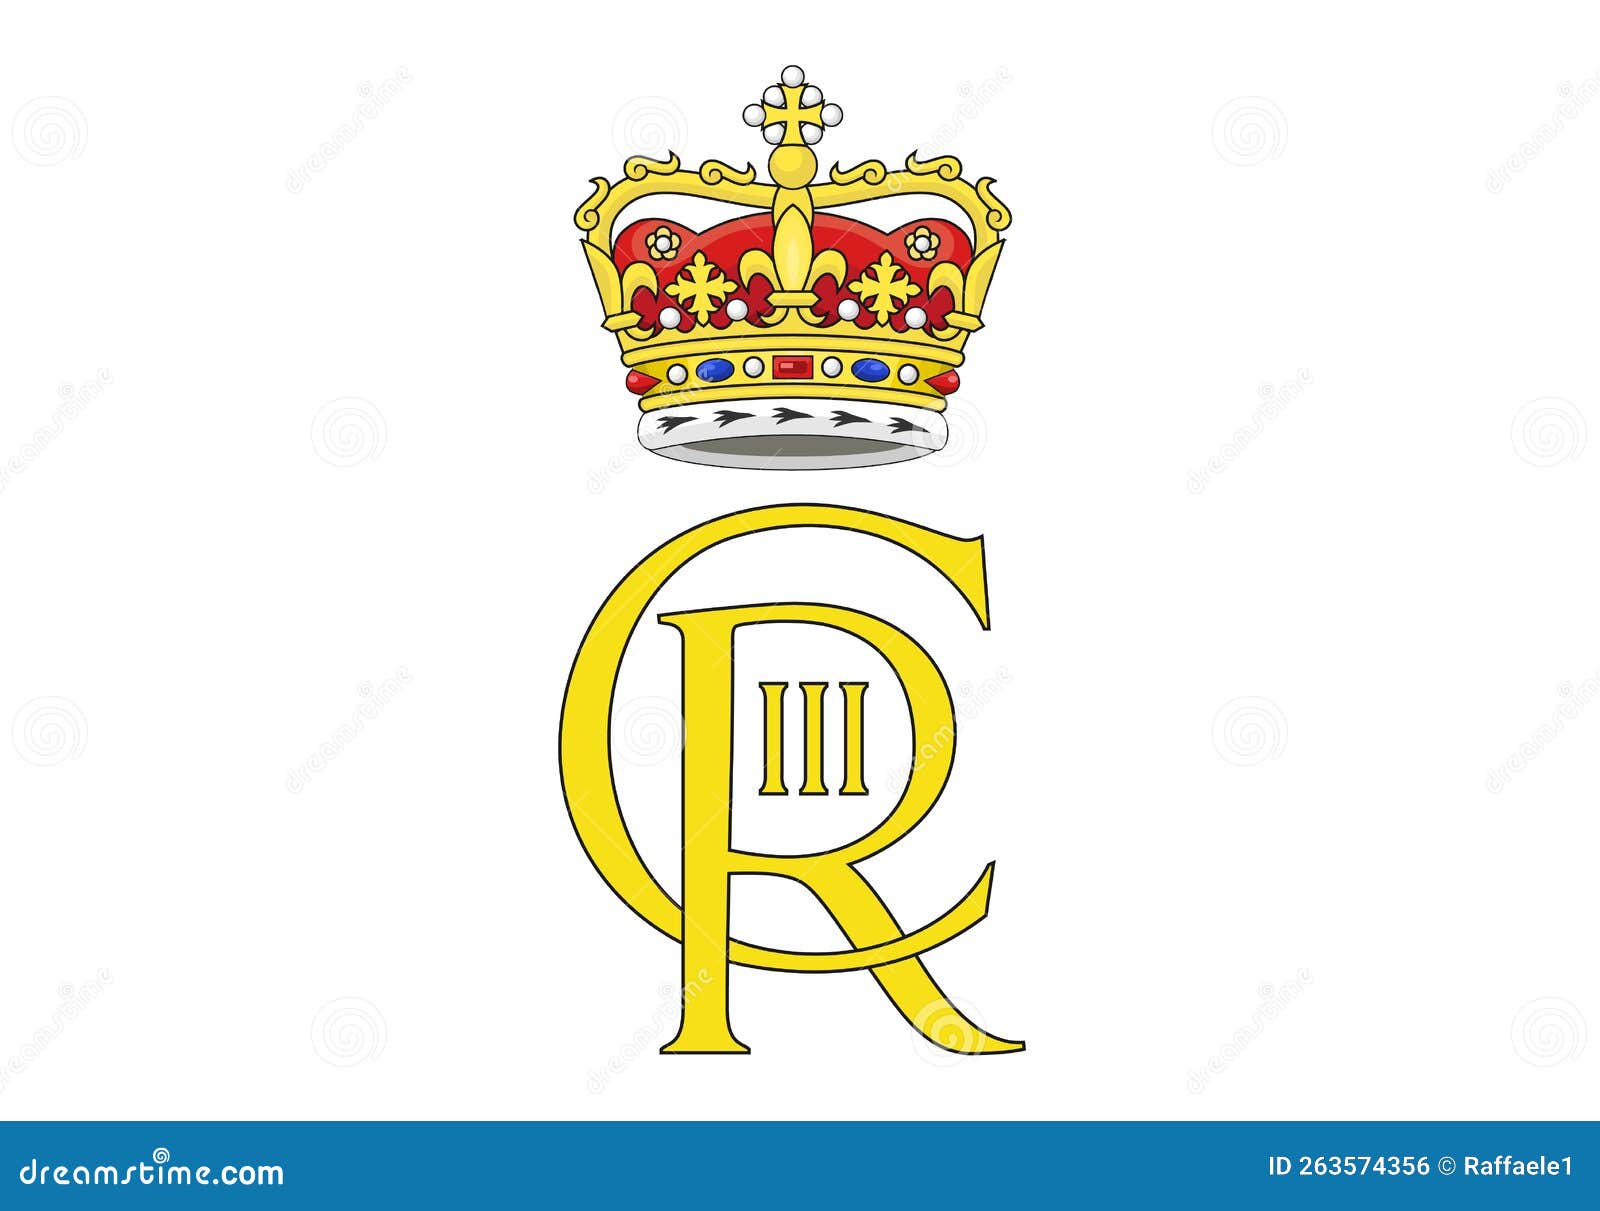 royal cypher of king charles iii scotland